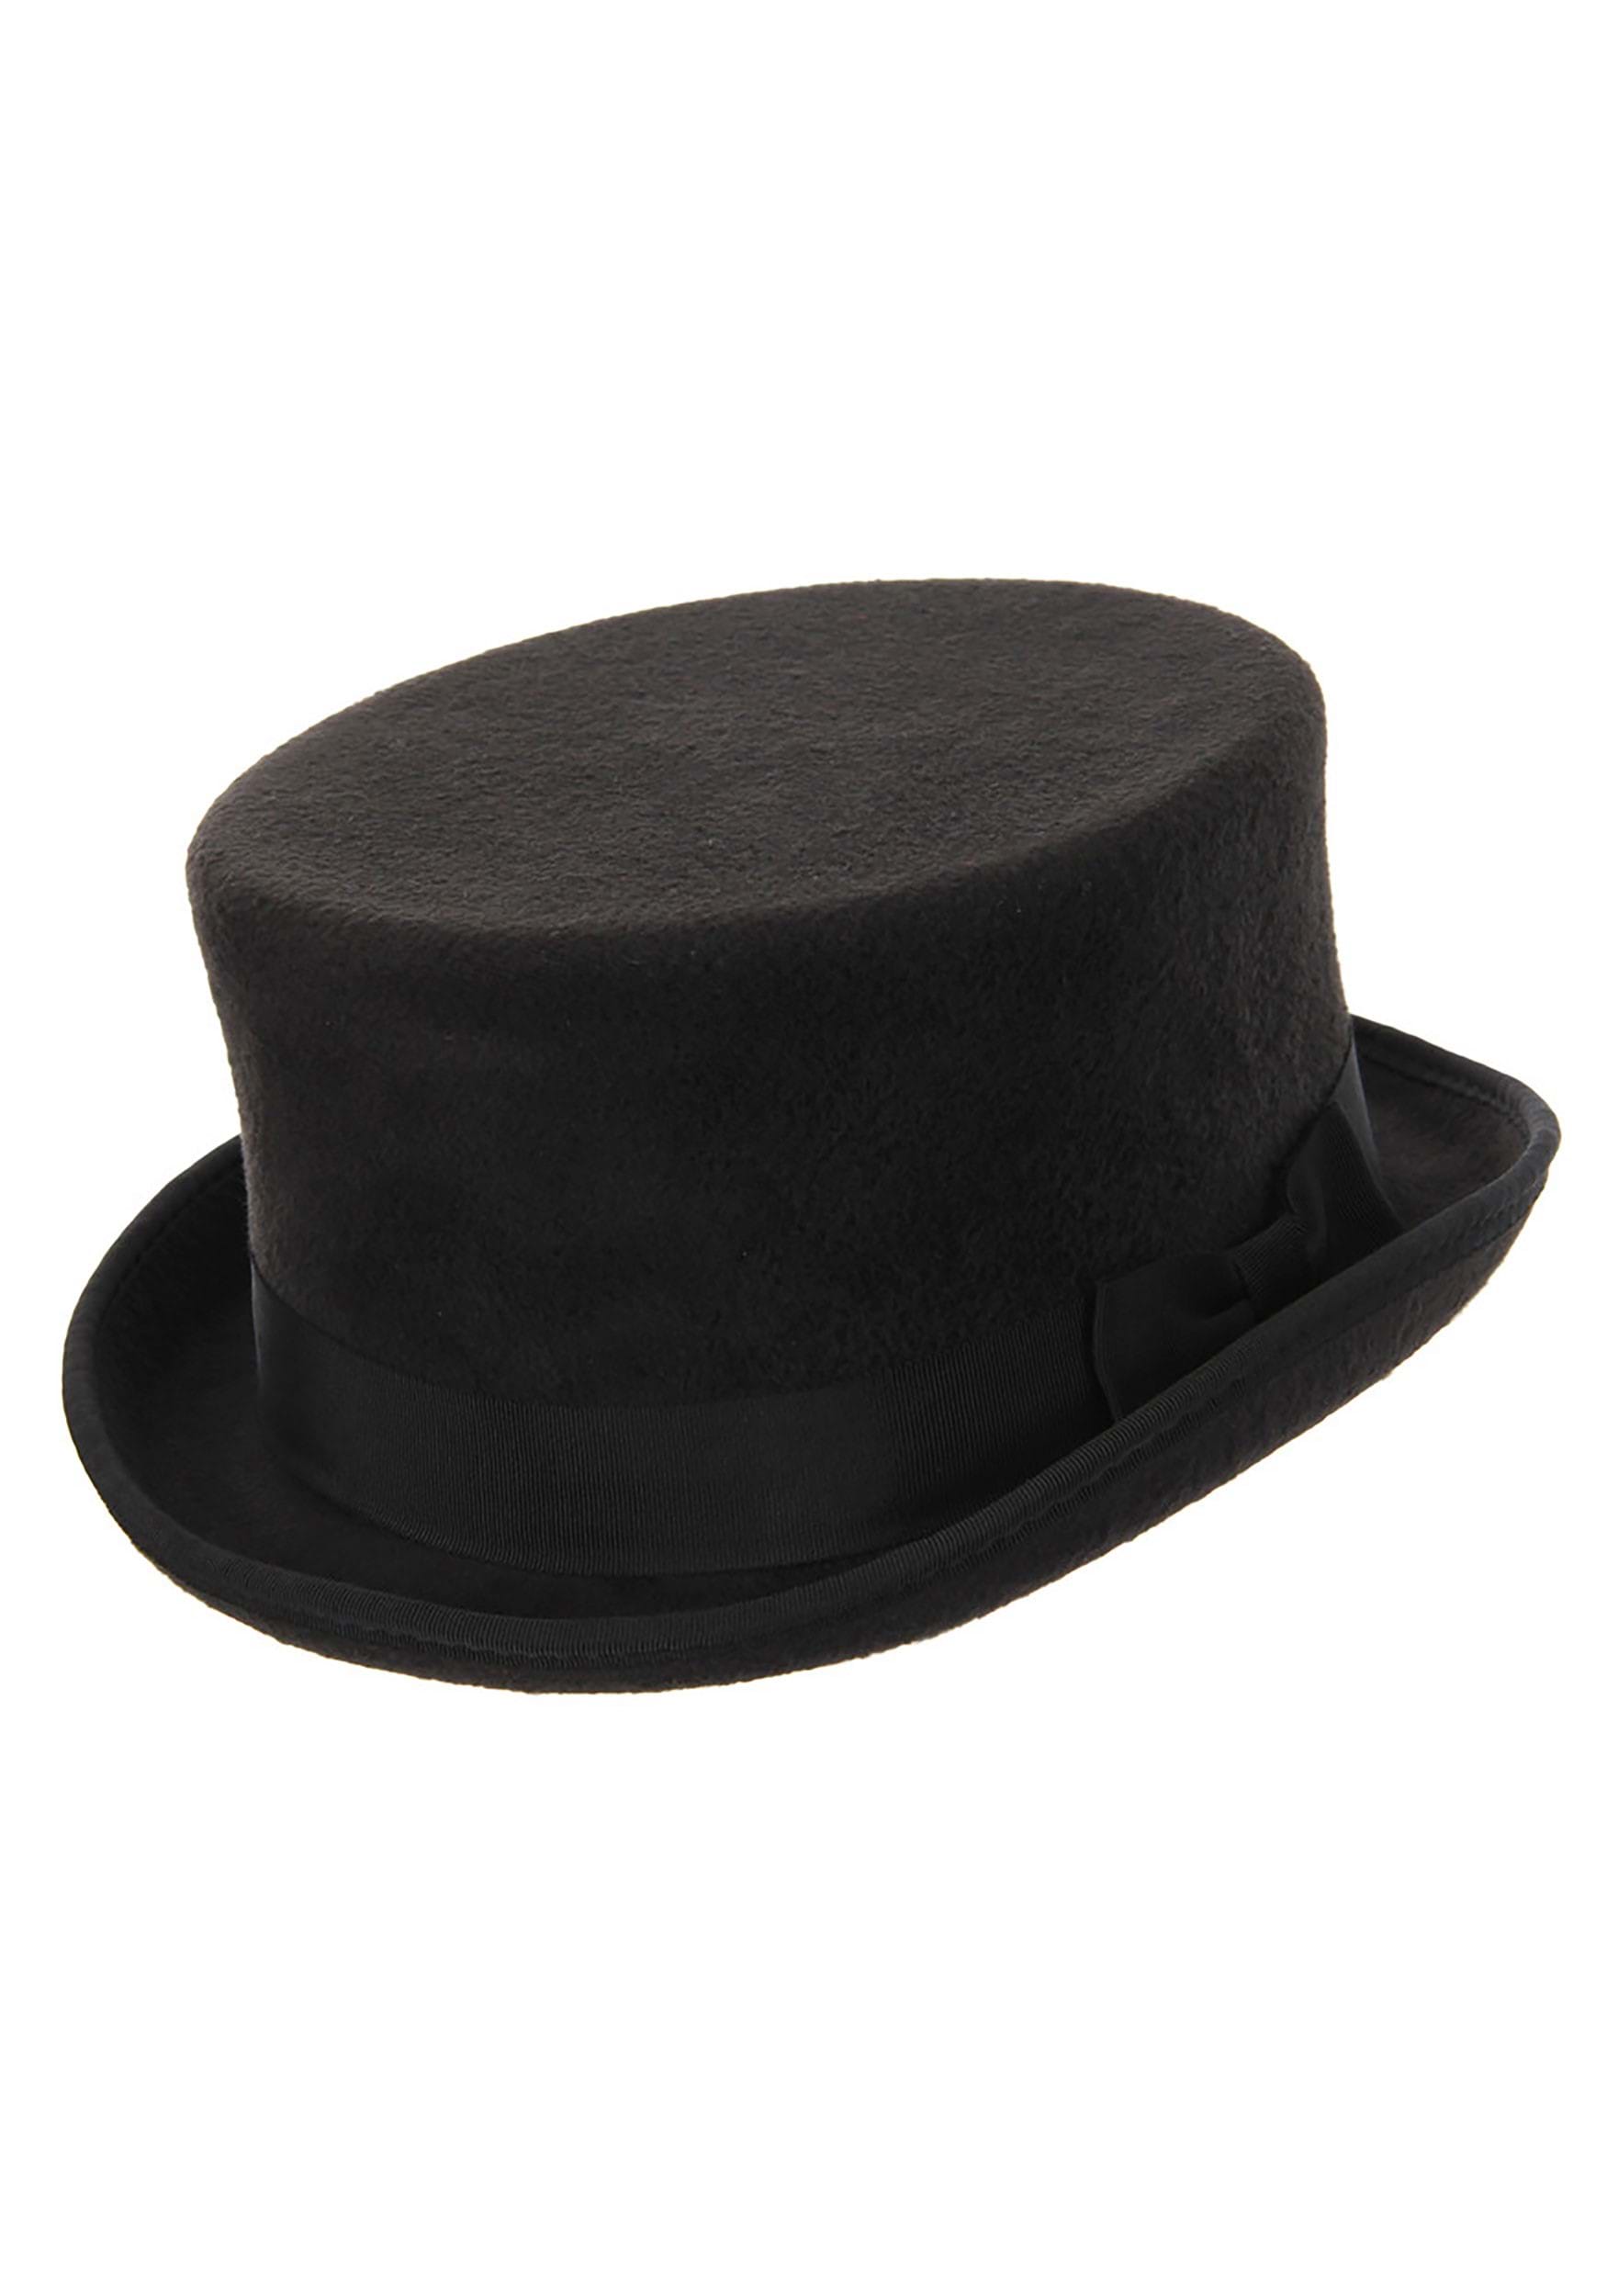 Adult Black John Bull Fancy Dress Costume Hat , Fancy Dress Costume Party Hats